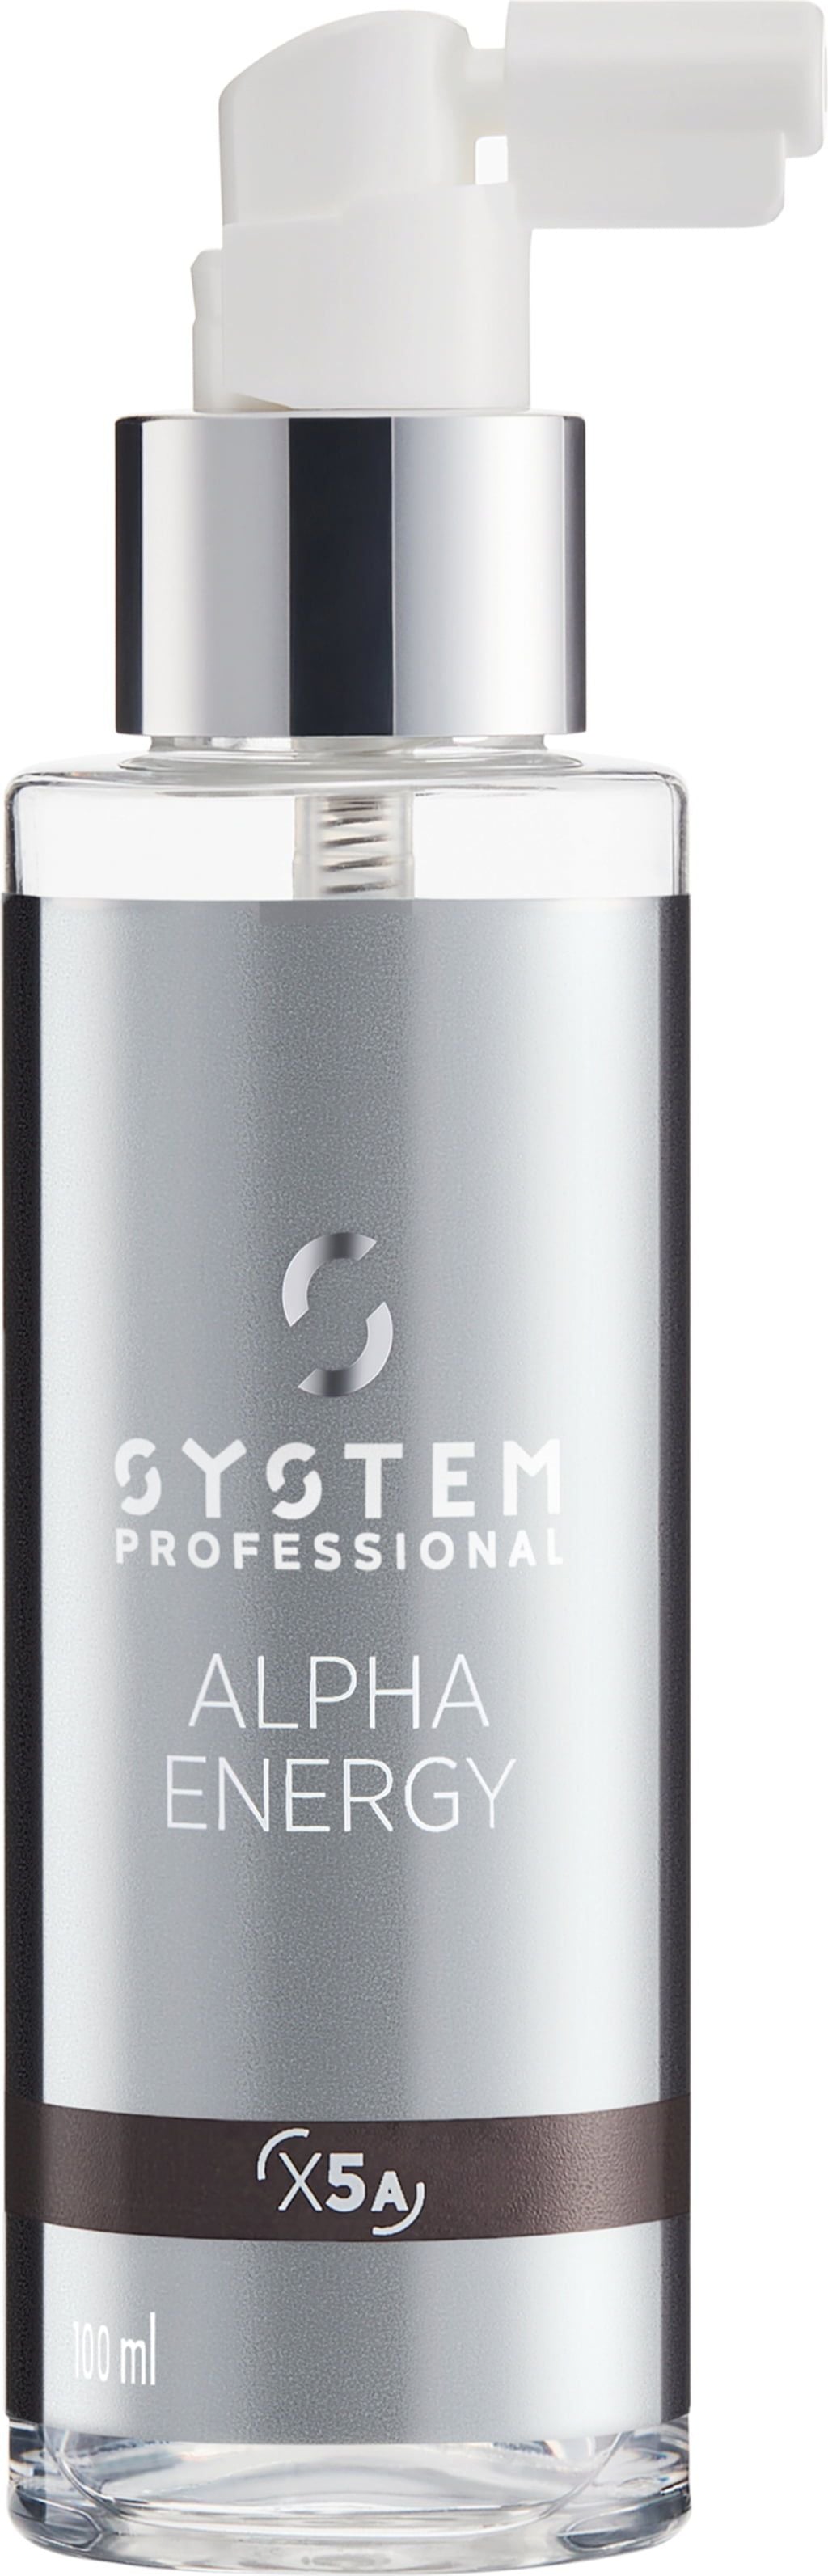 System Professional Alpha Energy 